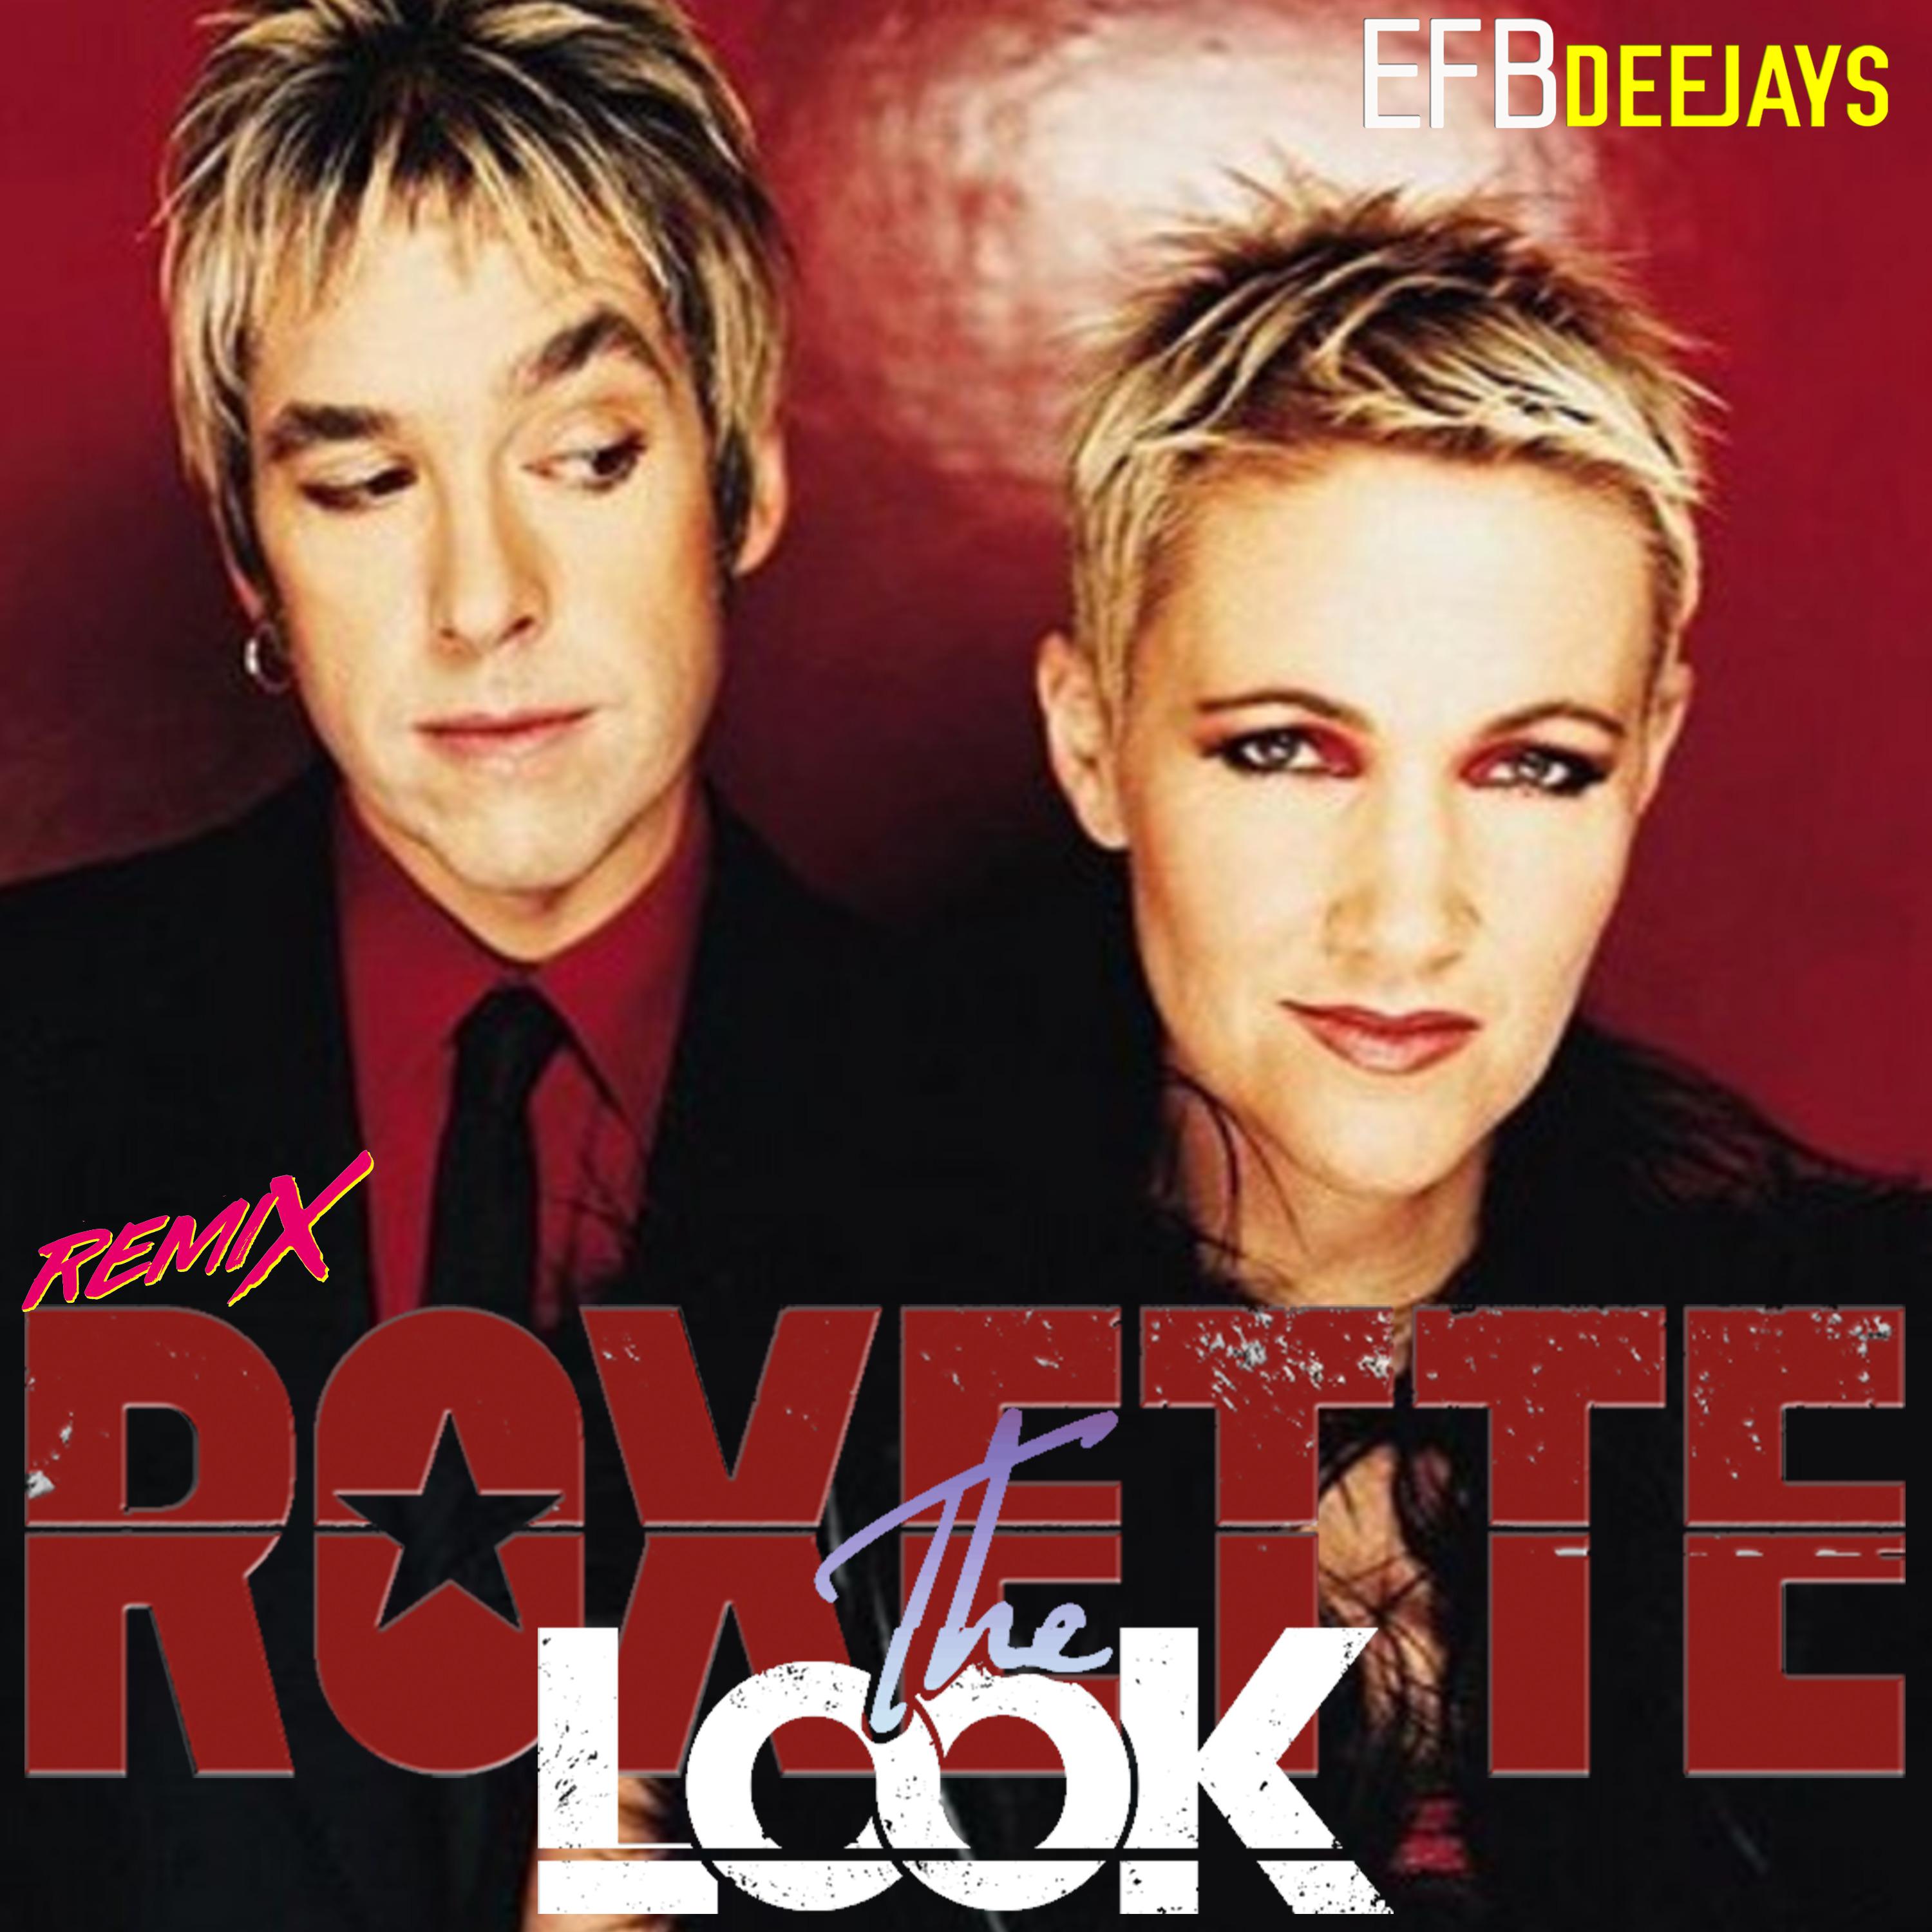 歌曲名《The Look (Remix)》，由 Roxette、Efb Deejays 演唱，收录于《The Look (Remix)》专辑中.